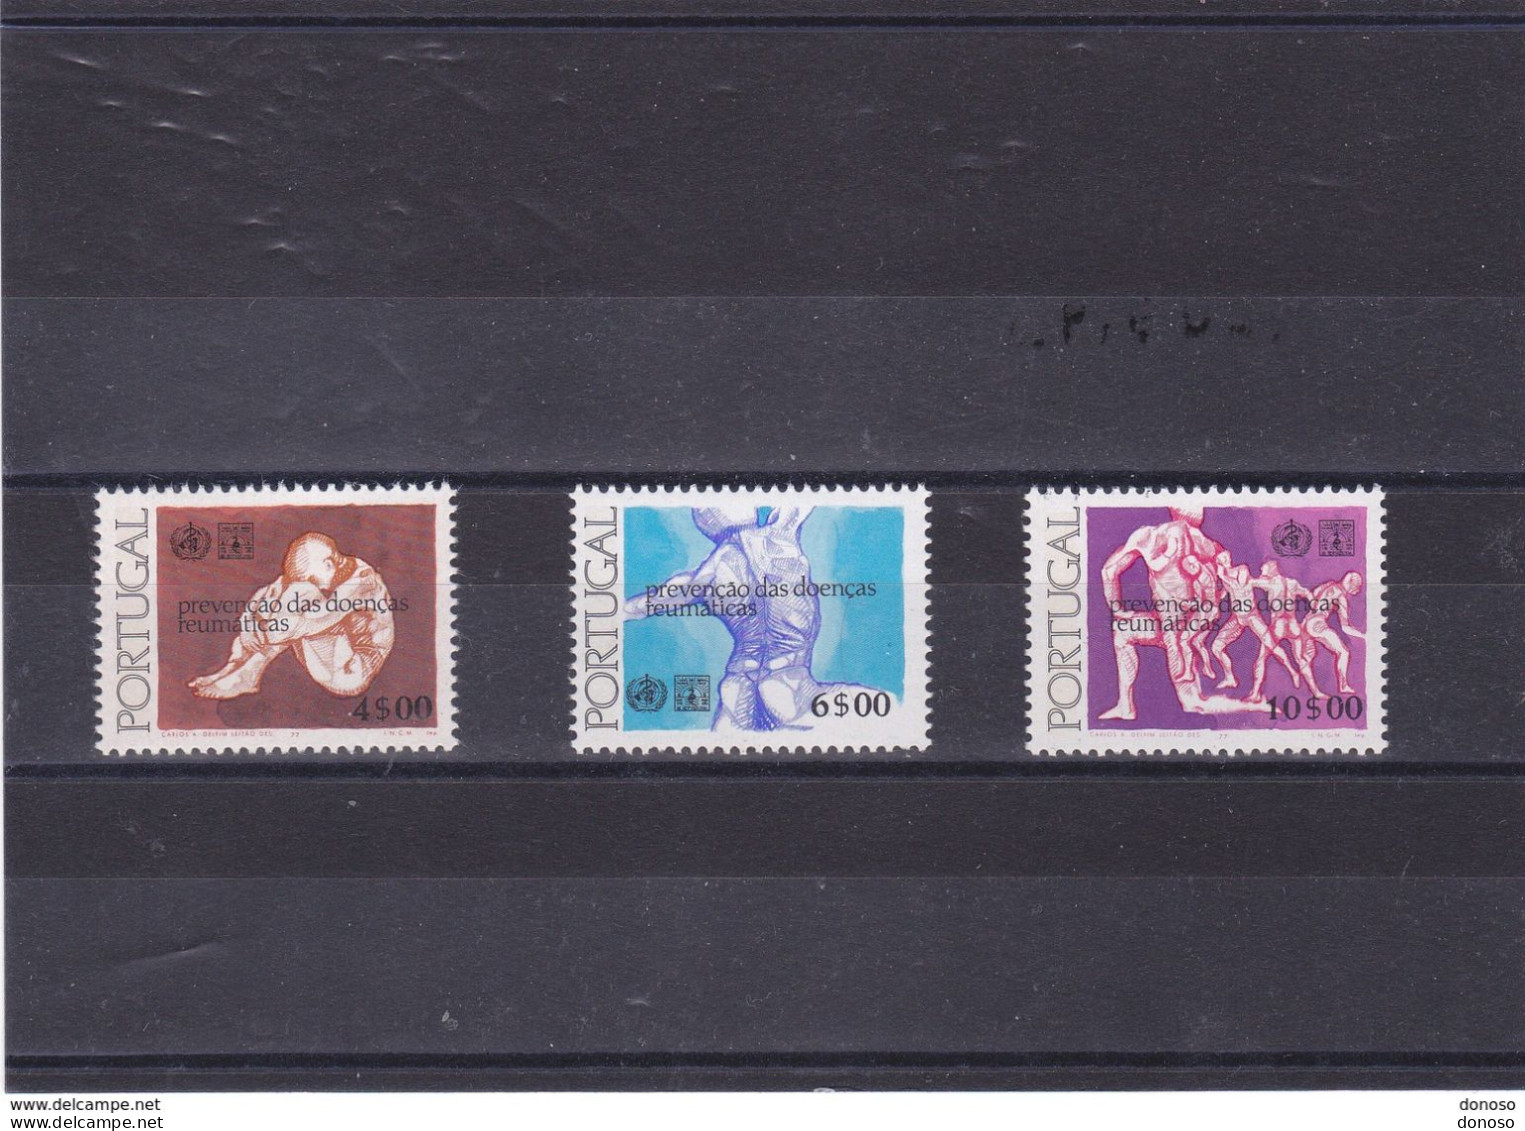 PORTUGAL 1977 RHUMATISME Yvert 1337-1339, Michel 1357-1359 NEUF** MNH Cote 3,50 Euros - Unused Stamps